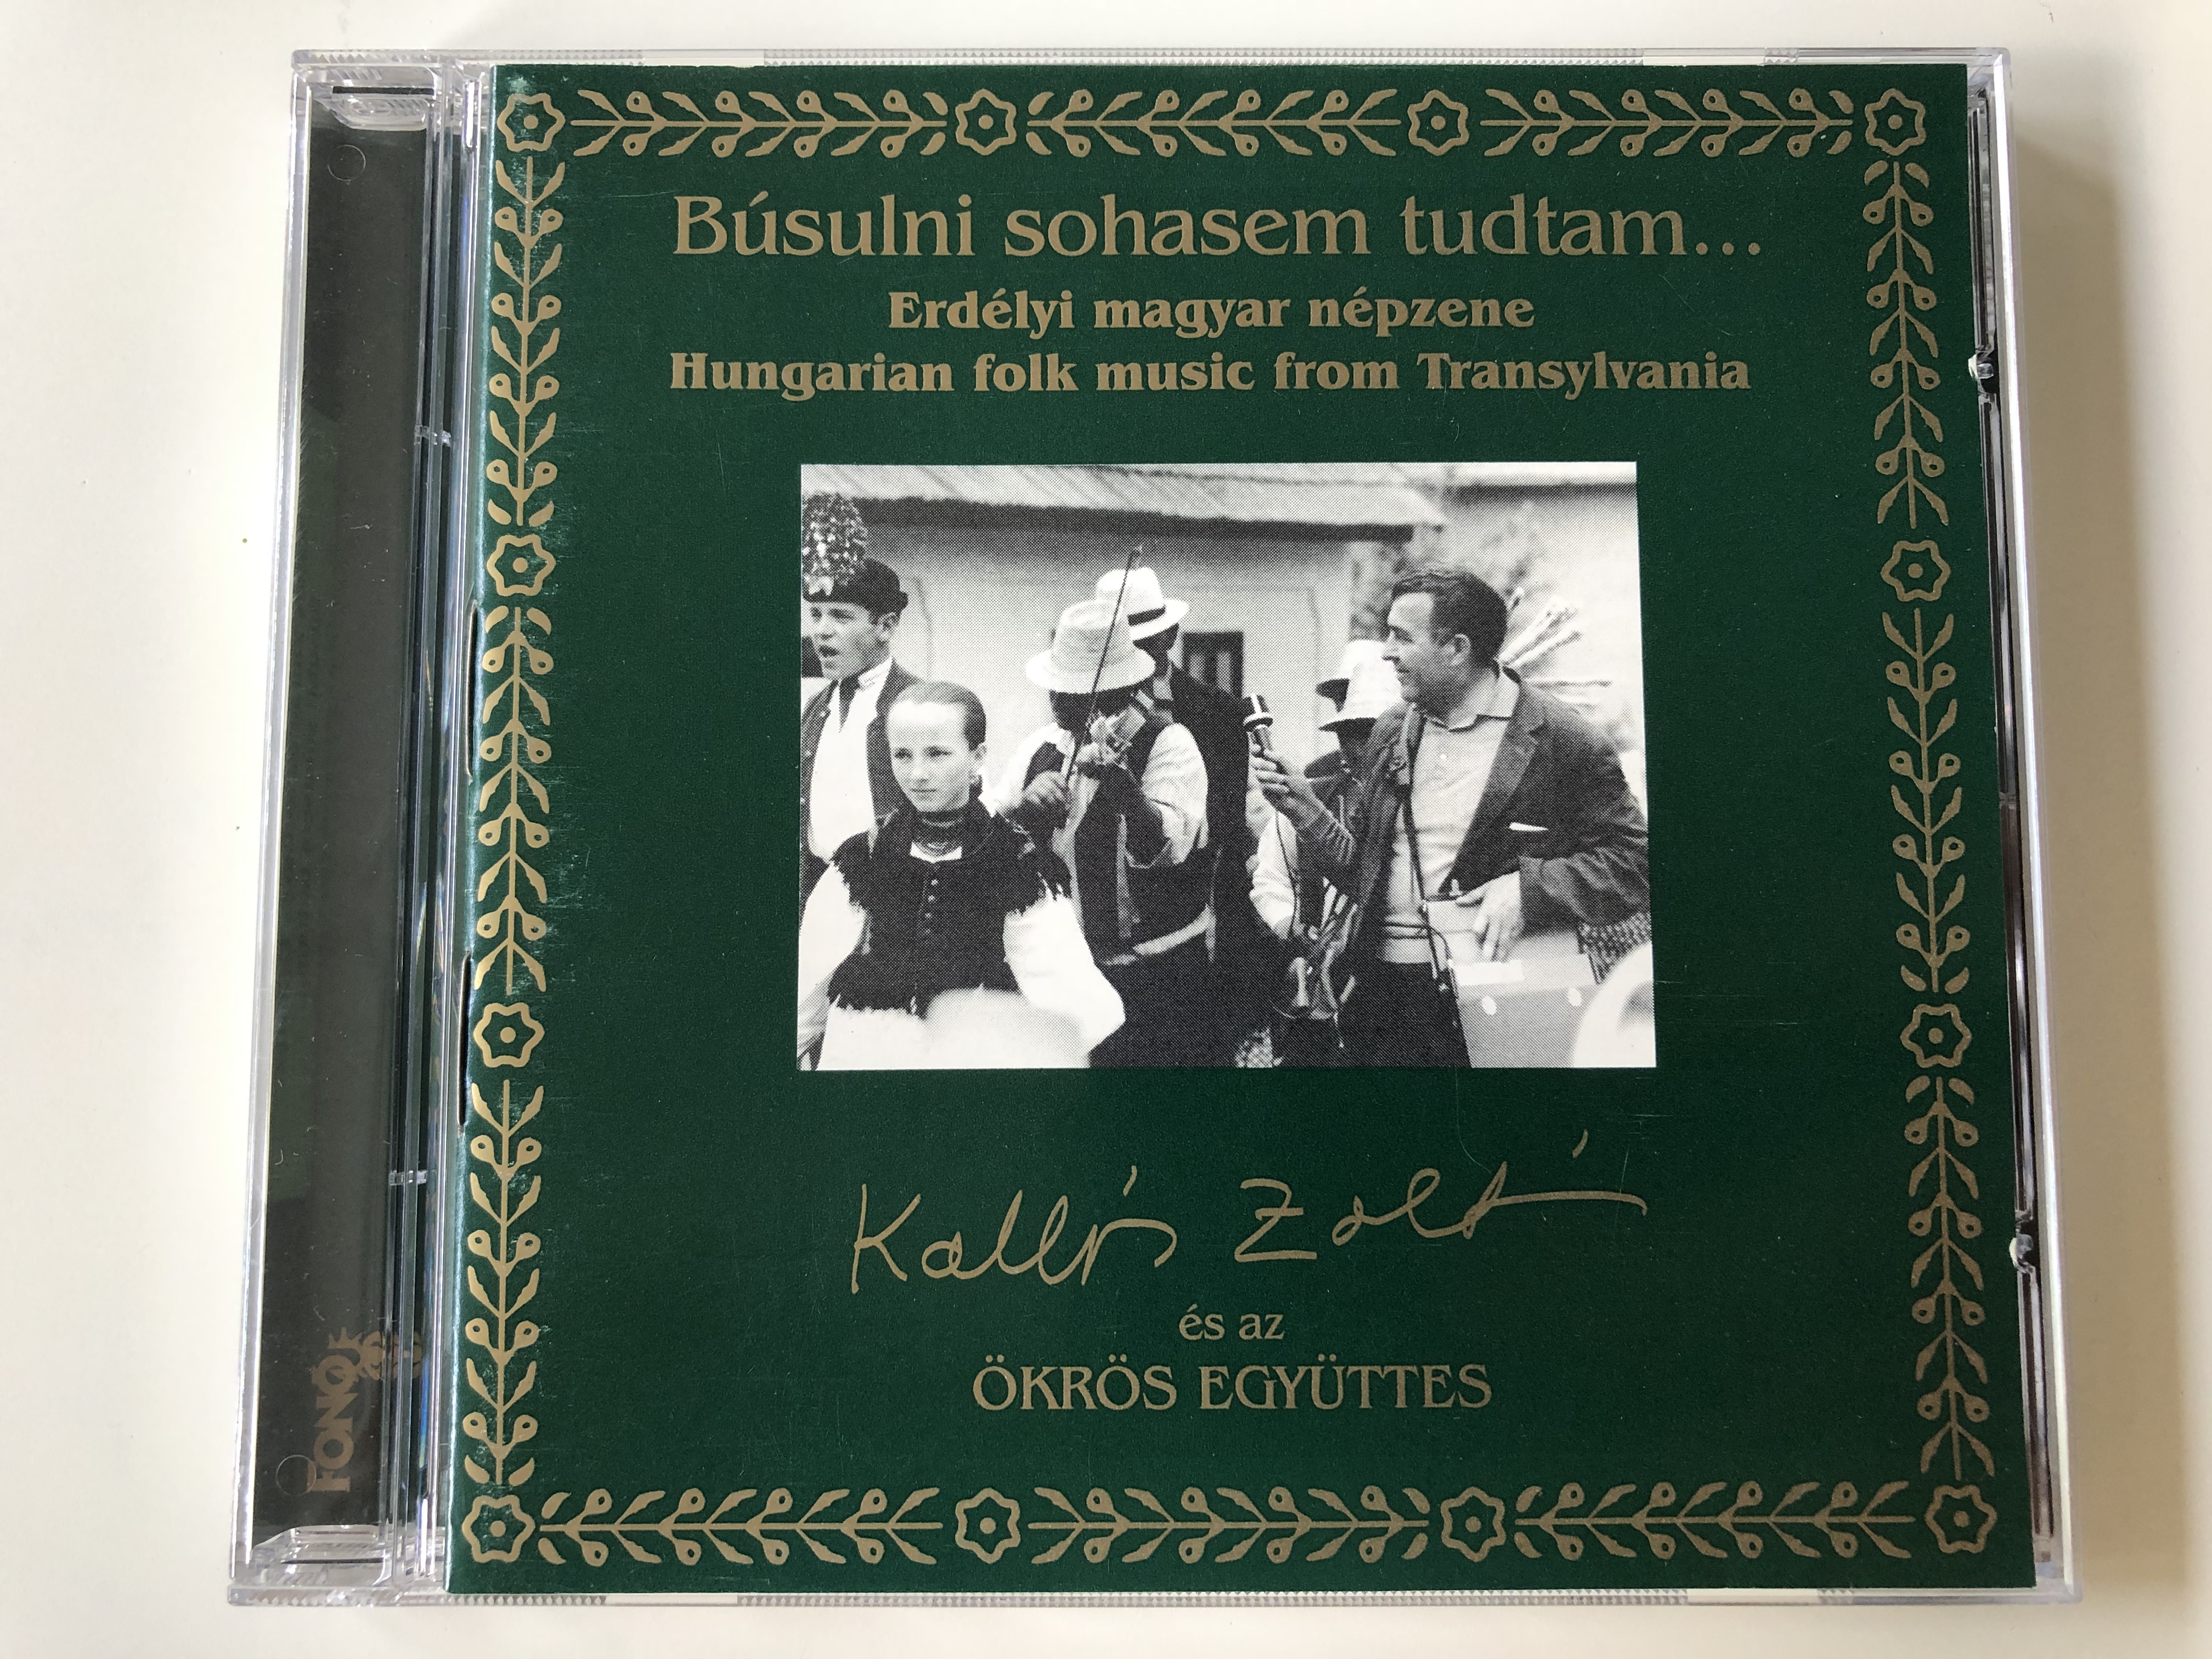 b-sulni-sohasem-tudtam...-erdelyi-magyar-nepzene-hungarian-folk-music-from-transylvania-kall-s-zolt-n-s-az-kr-s-egy-ttes-fon-records-audio-cd-1997-fa-028-2-1-.jpg